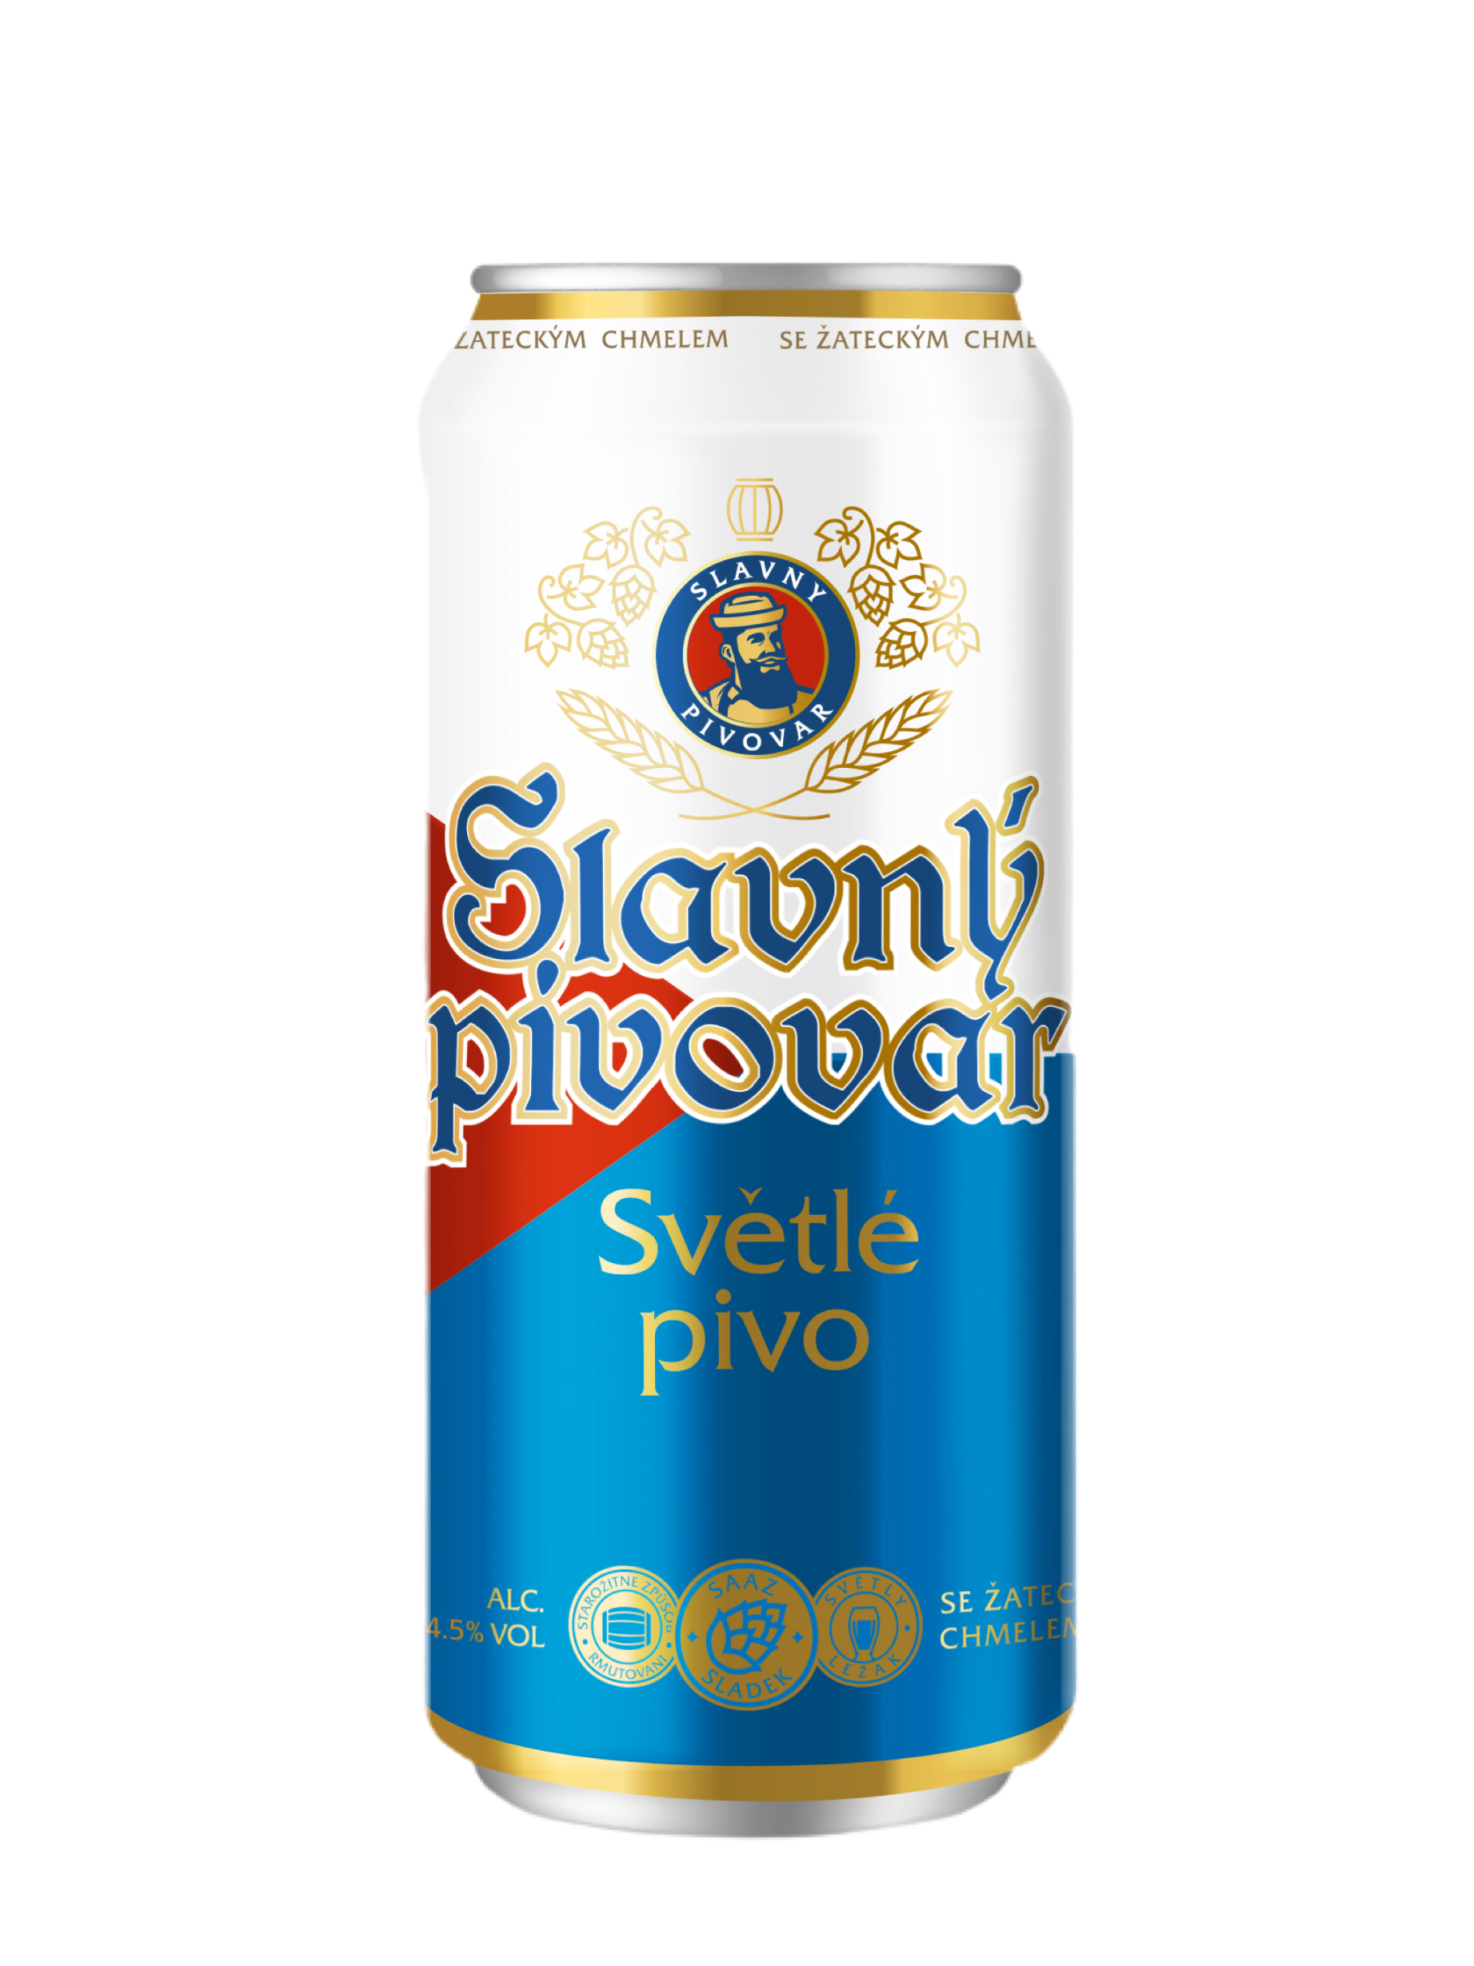 Ооо пивовар. Slavny Pivovar пиво светлое. Славный Пивовар пиво жб. Славный Пивовар 1.35. Пиво Schlosskeller Lager.